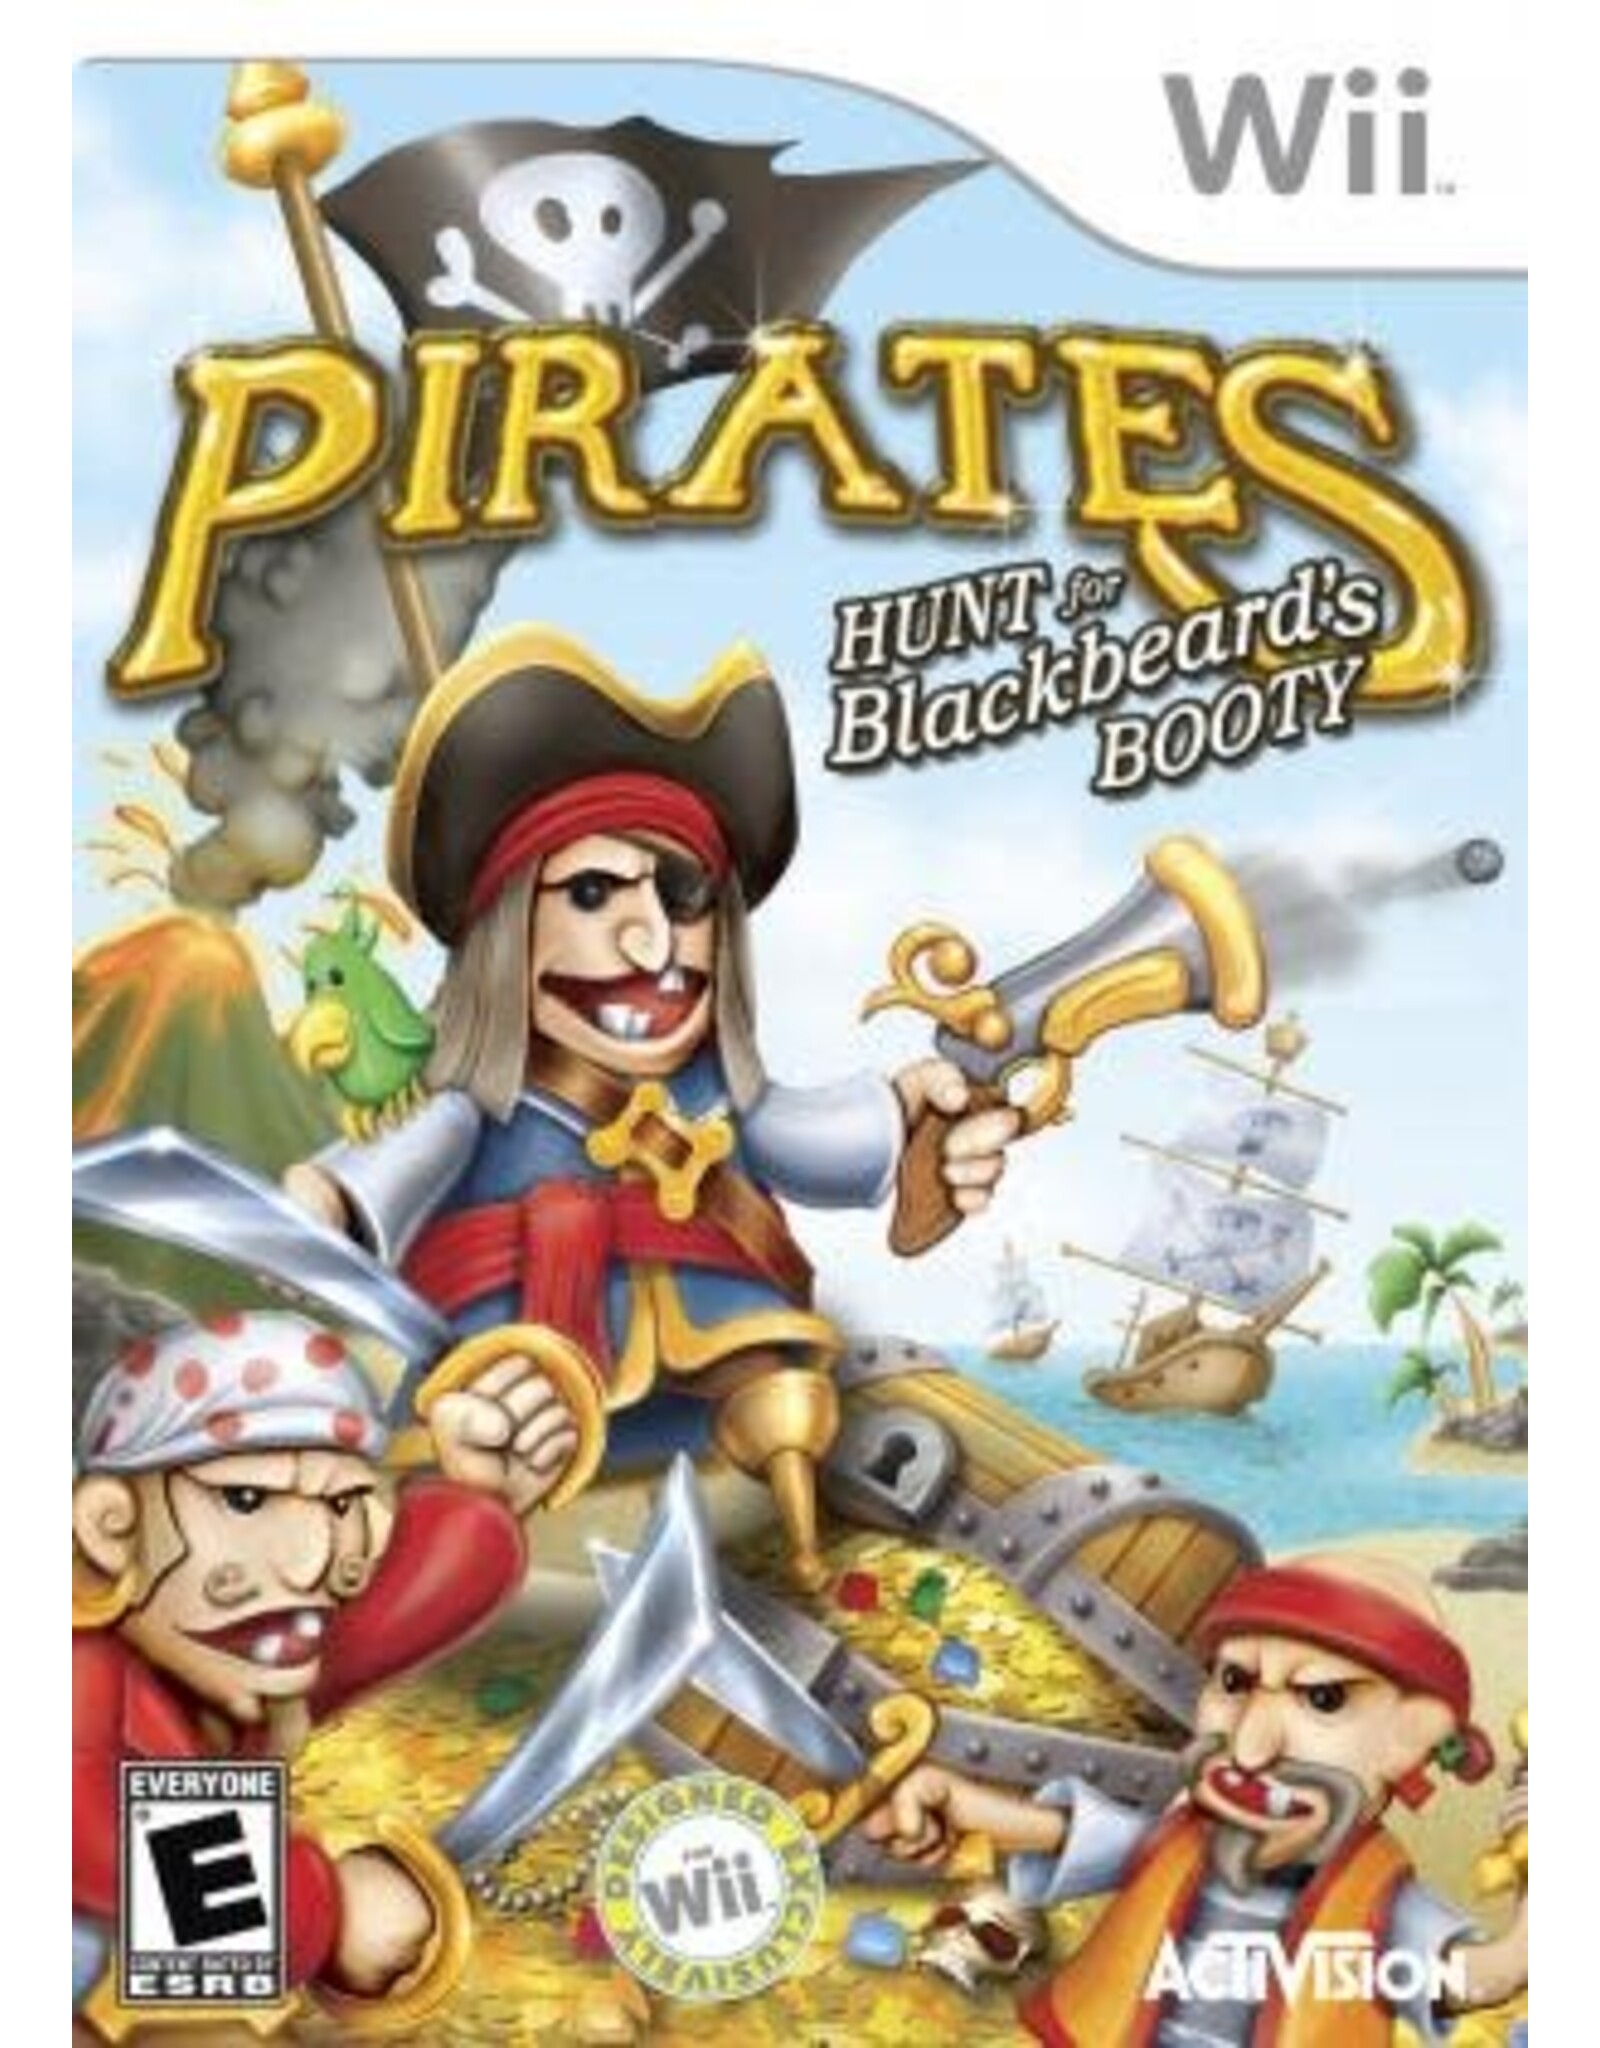 Wii Pirates: Hunt for Blackbeard's Booty (CIB)